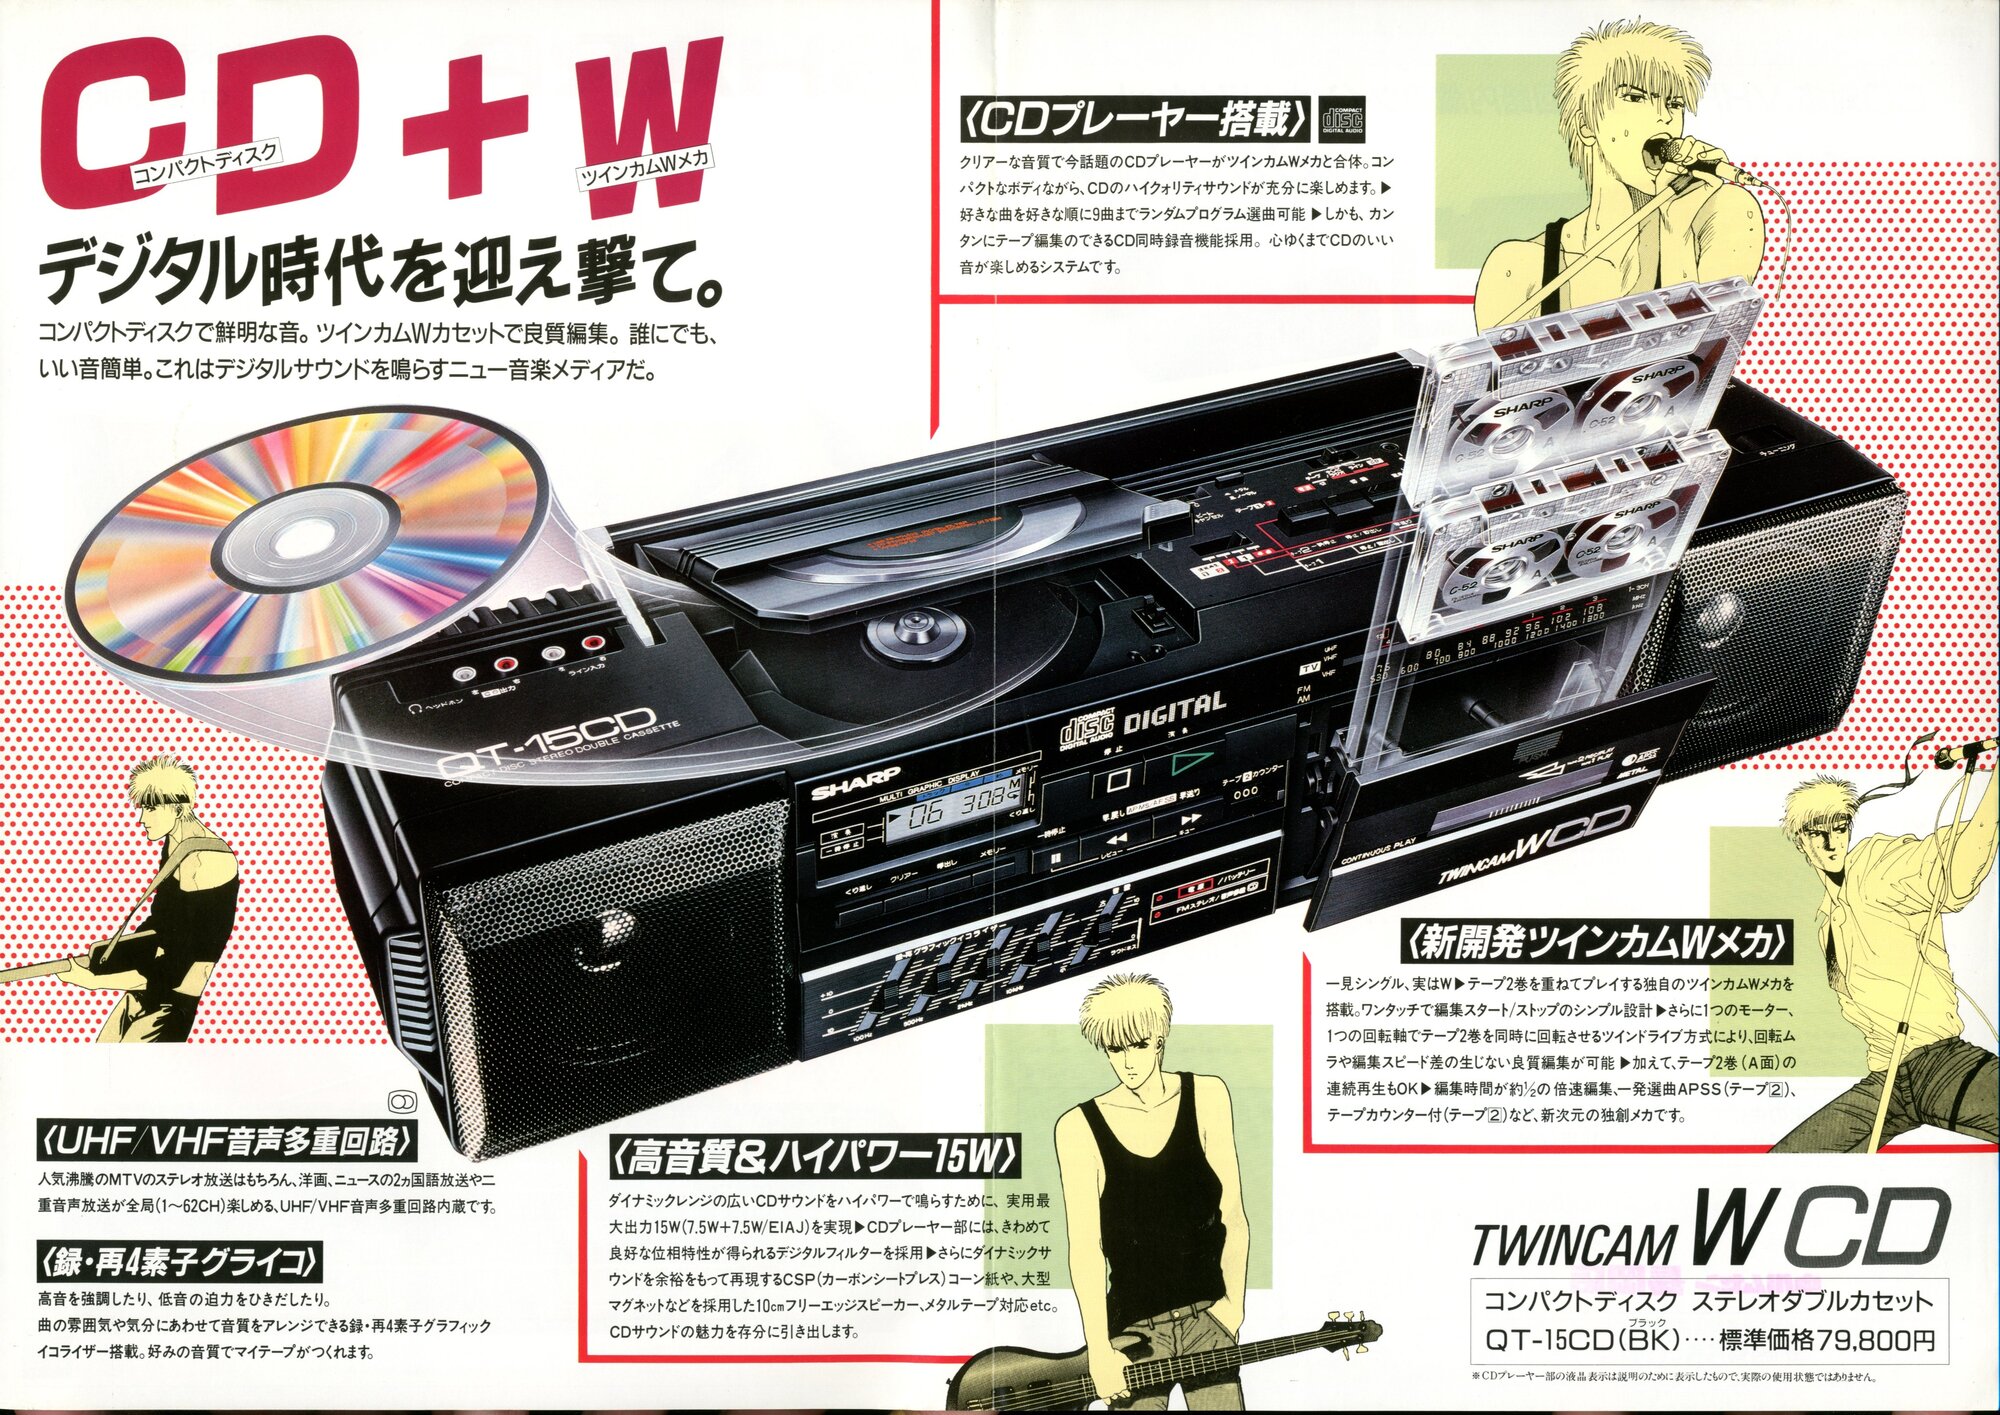 Twincam W CD.jpg